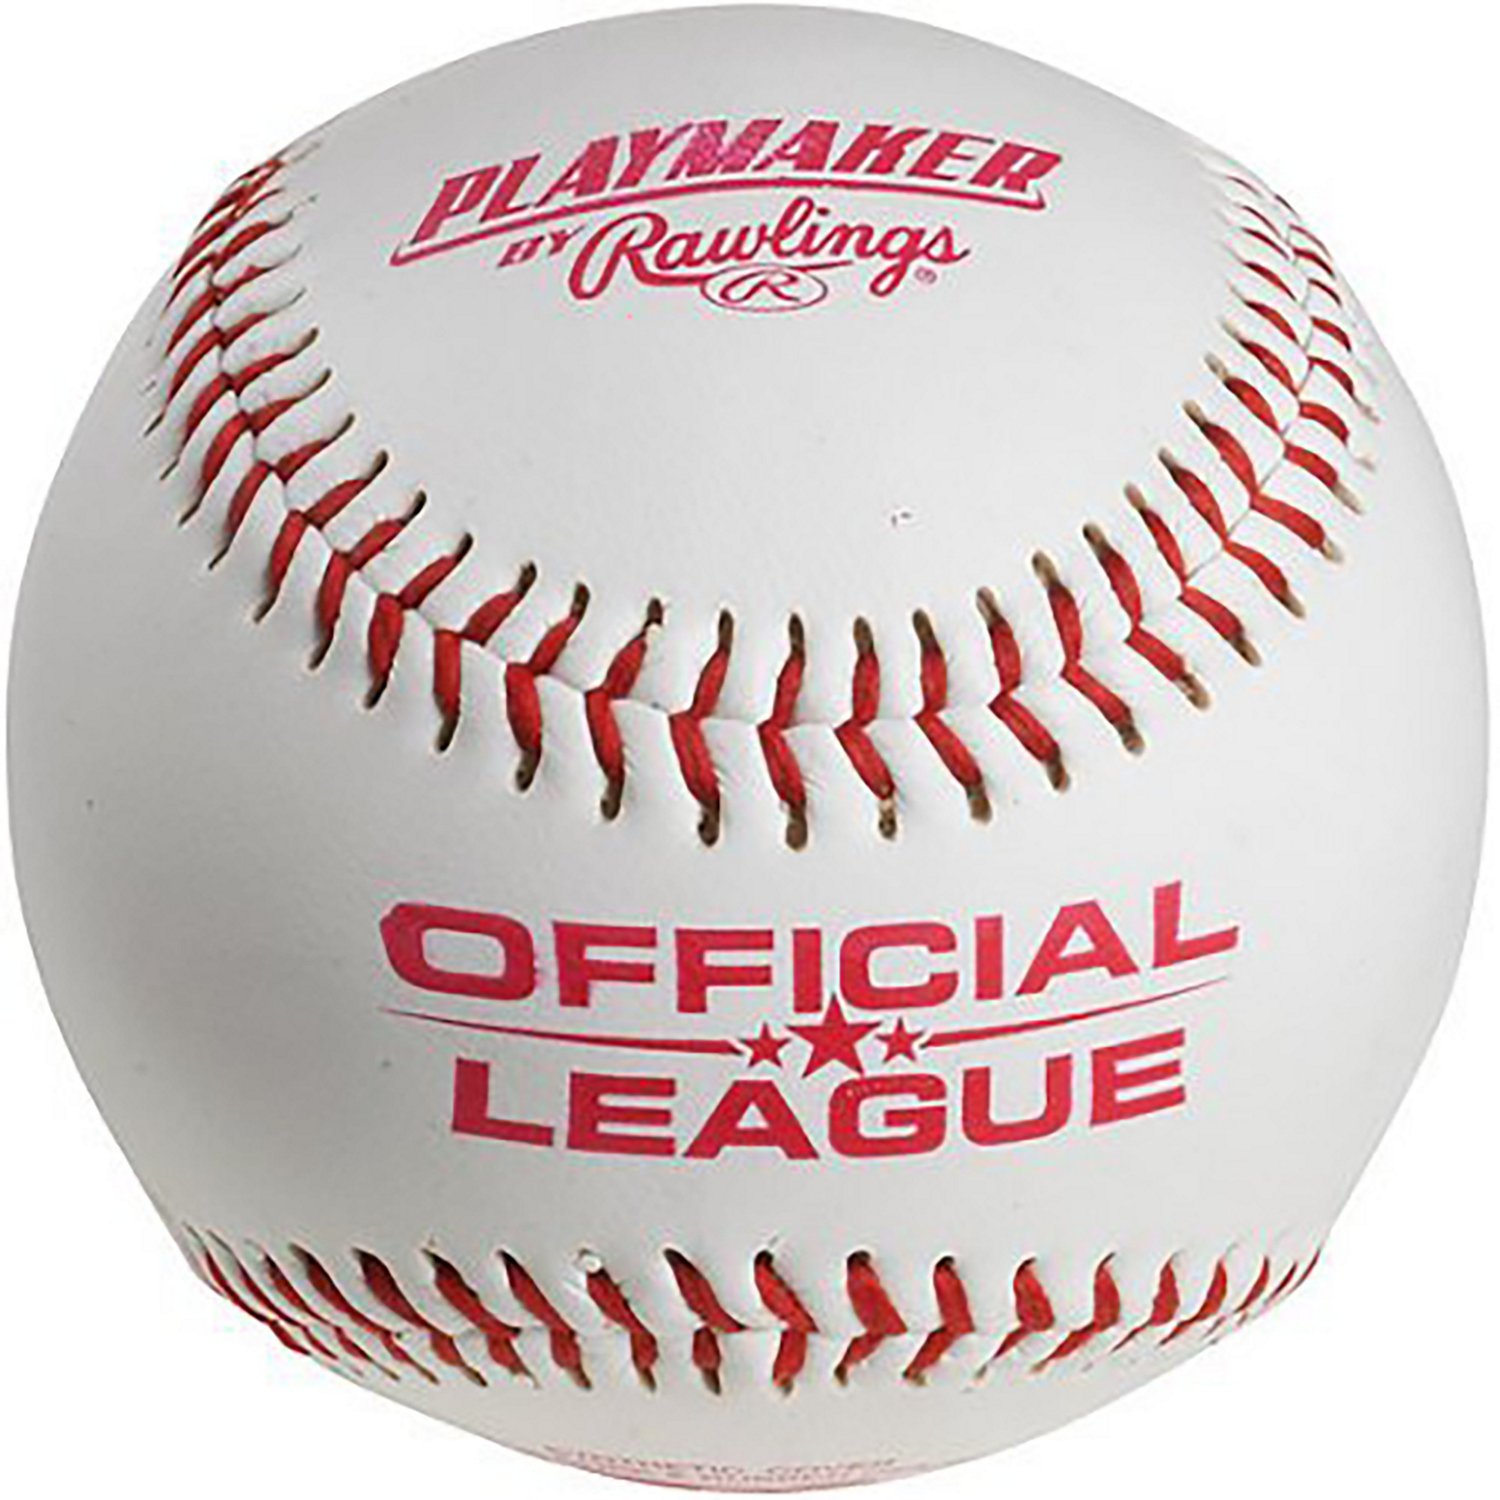 Rawlings Playmaker Official League Recreational Use Baseballs Box of 12 